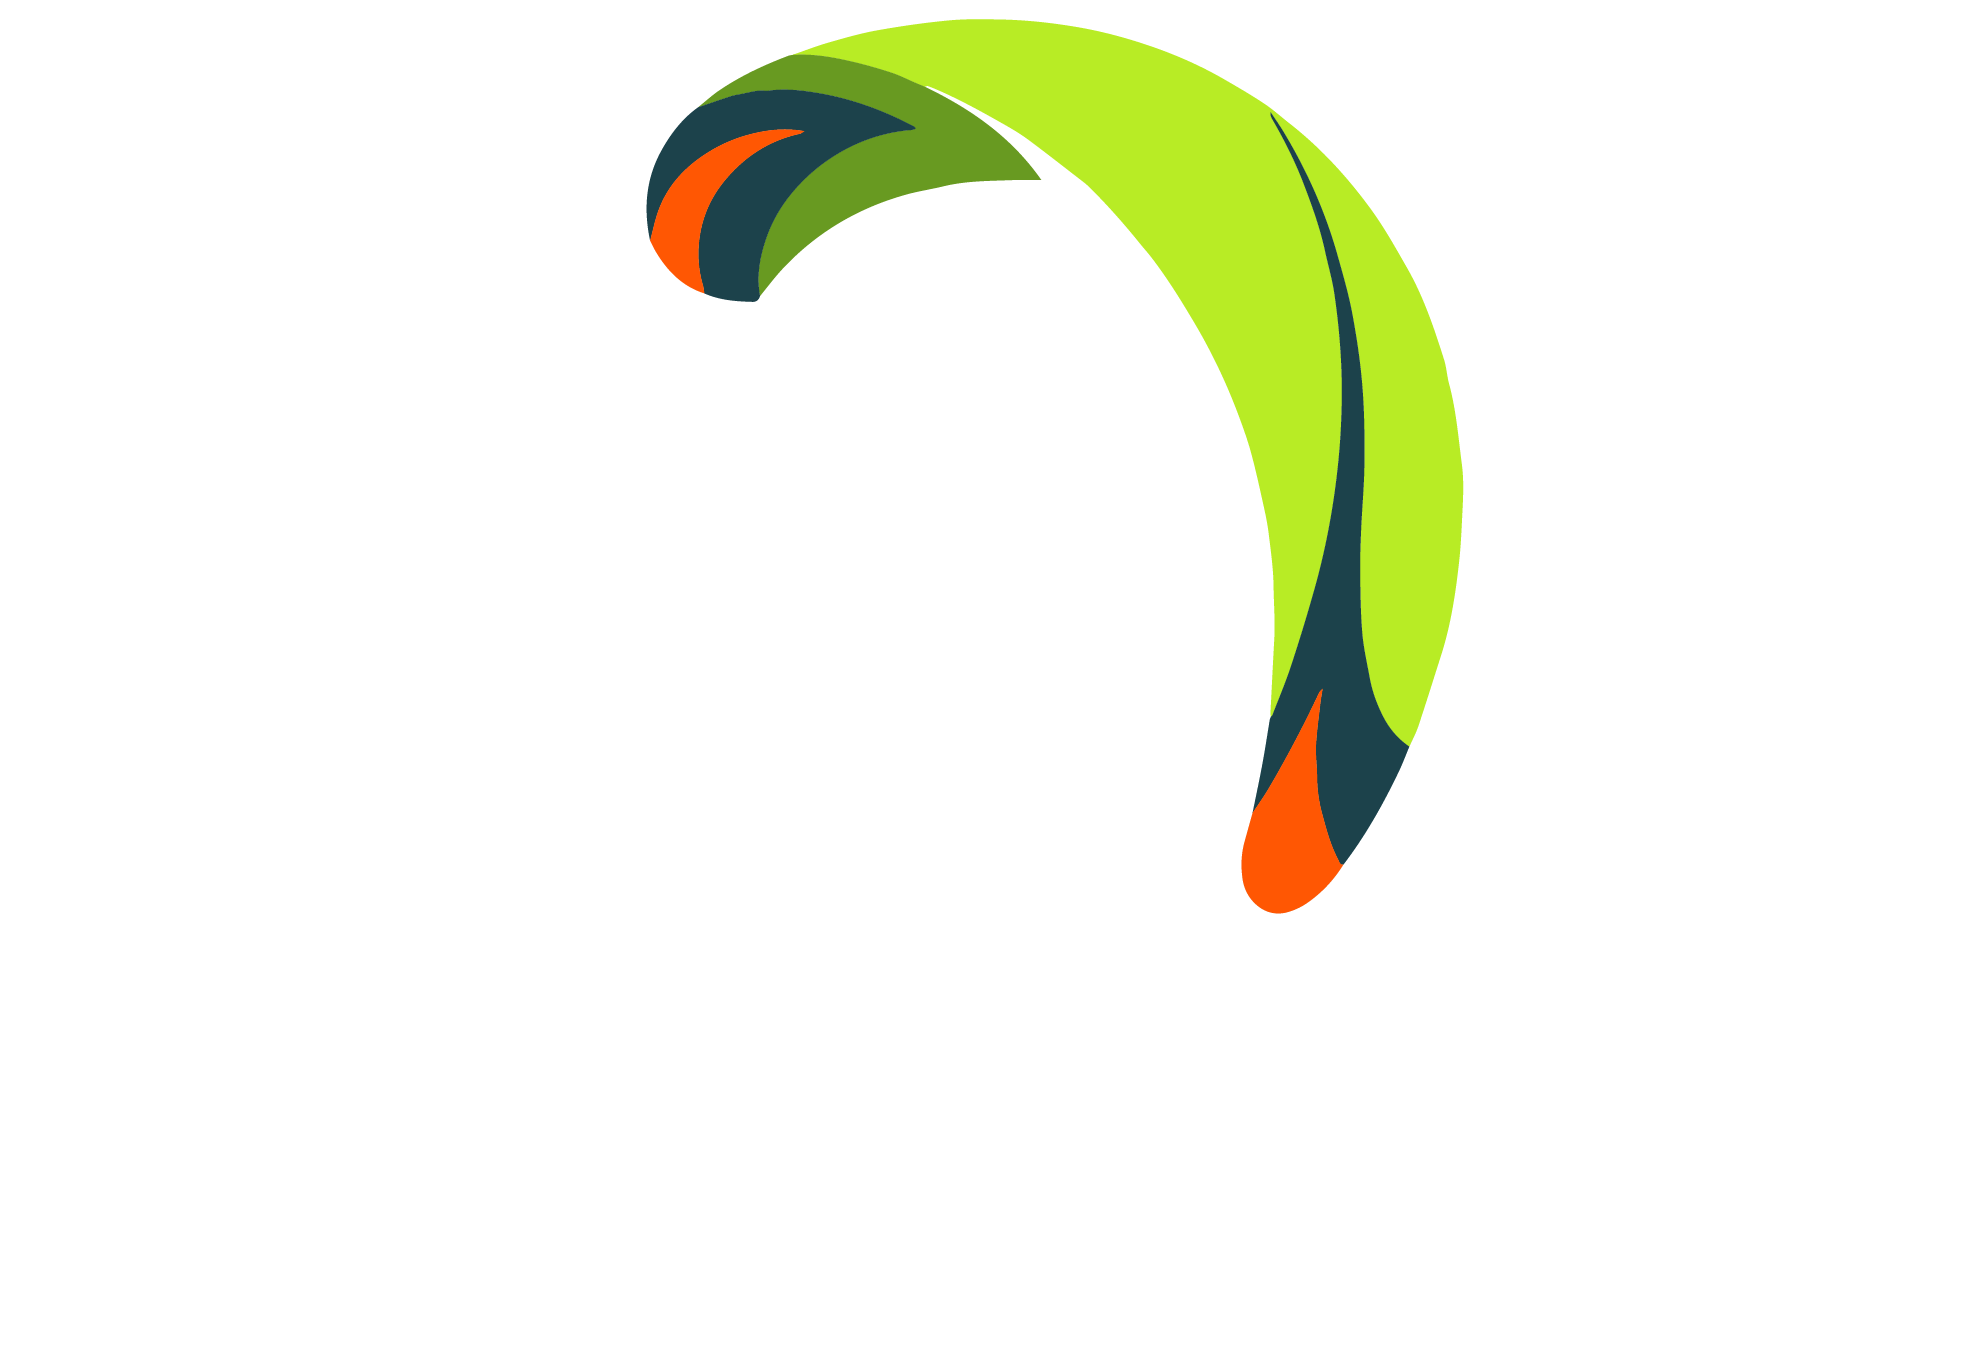 Elite Paragliding